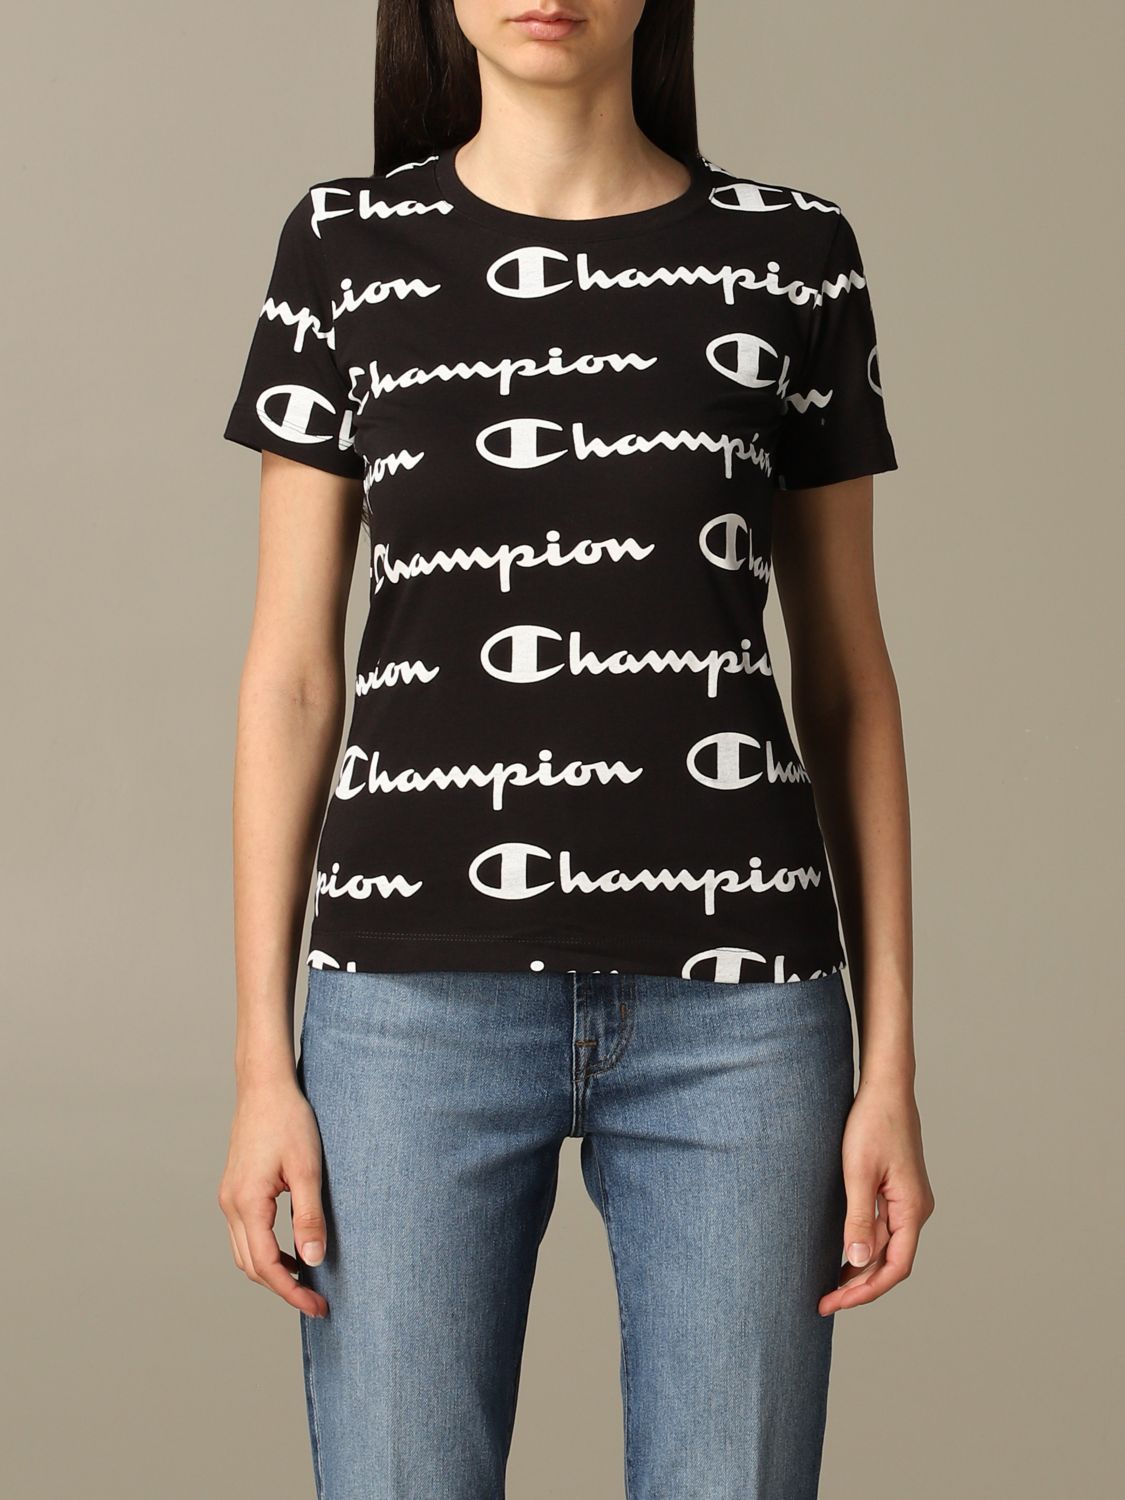 black champion t shirt women's